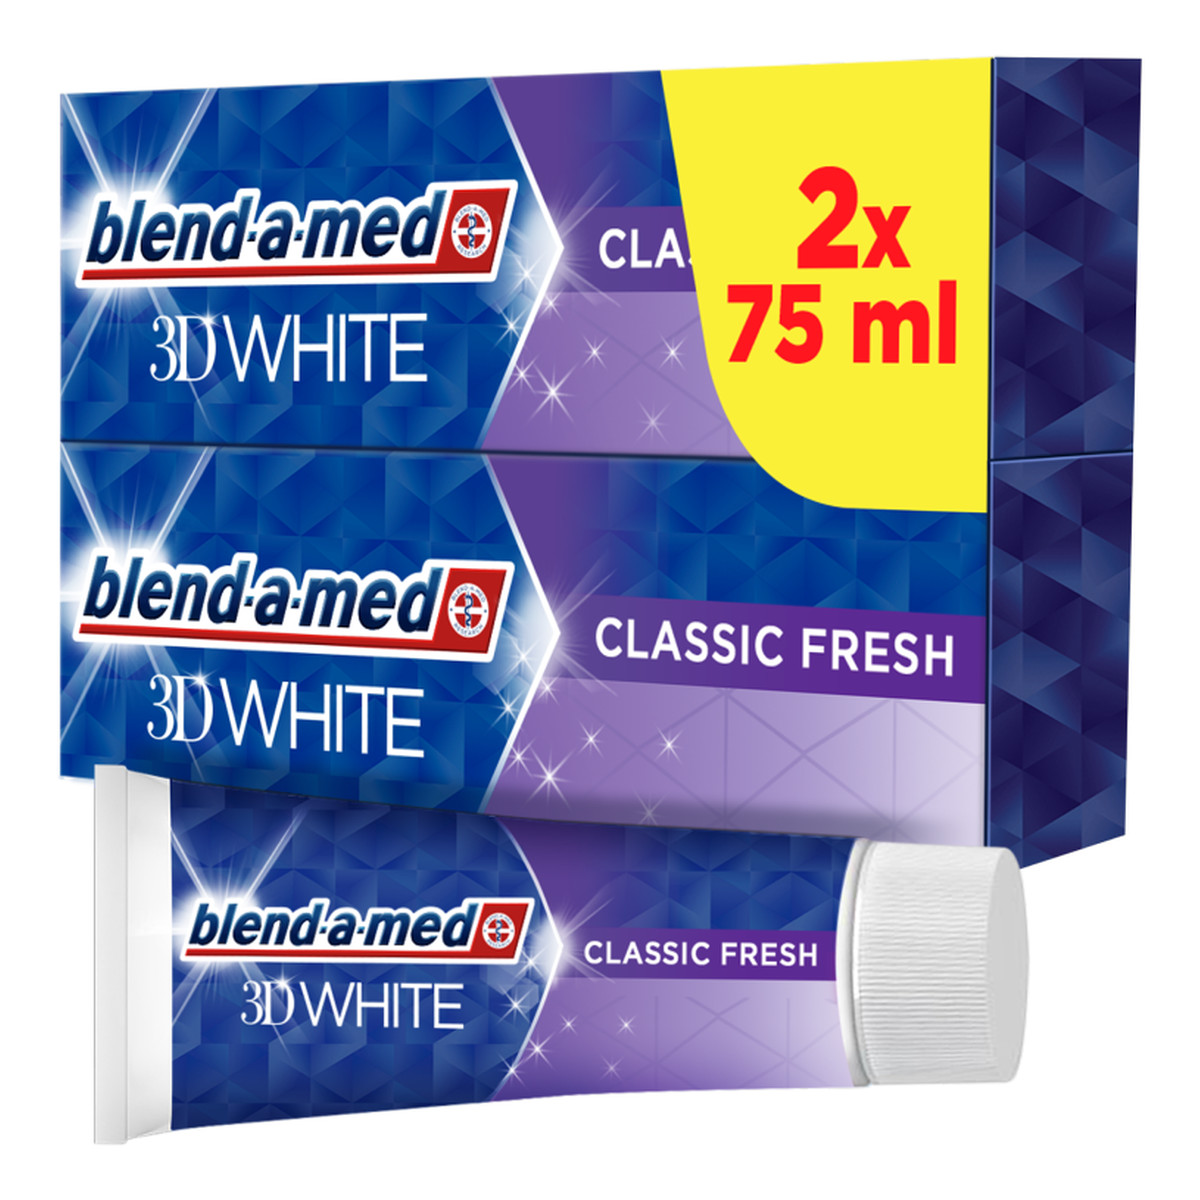 Blend-a-med 3D White Pasta do zębów Classic Fresh 75ml